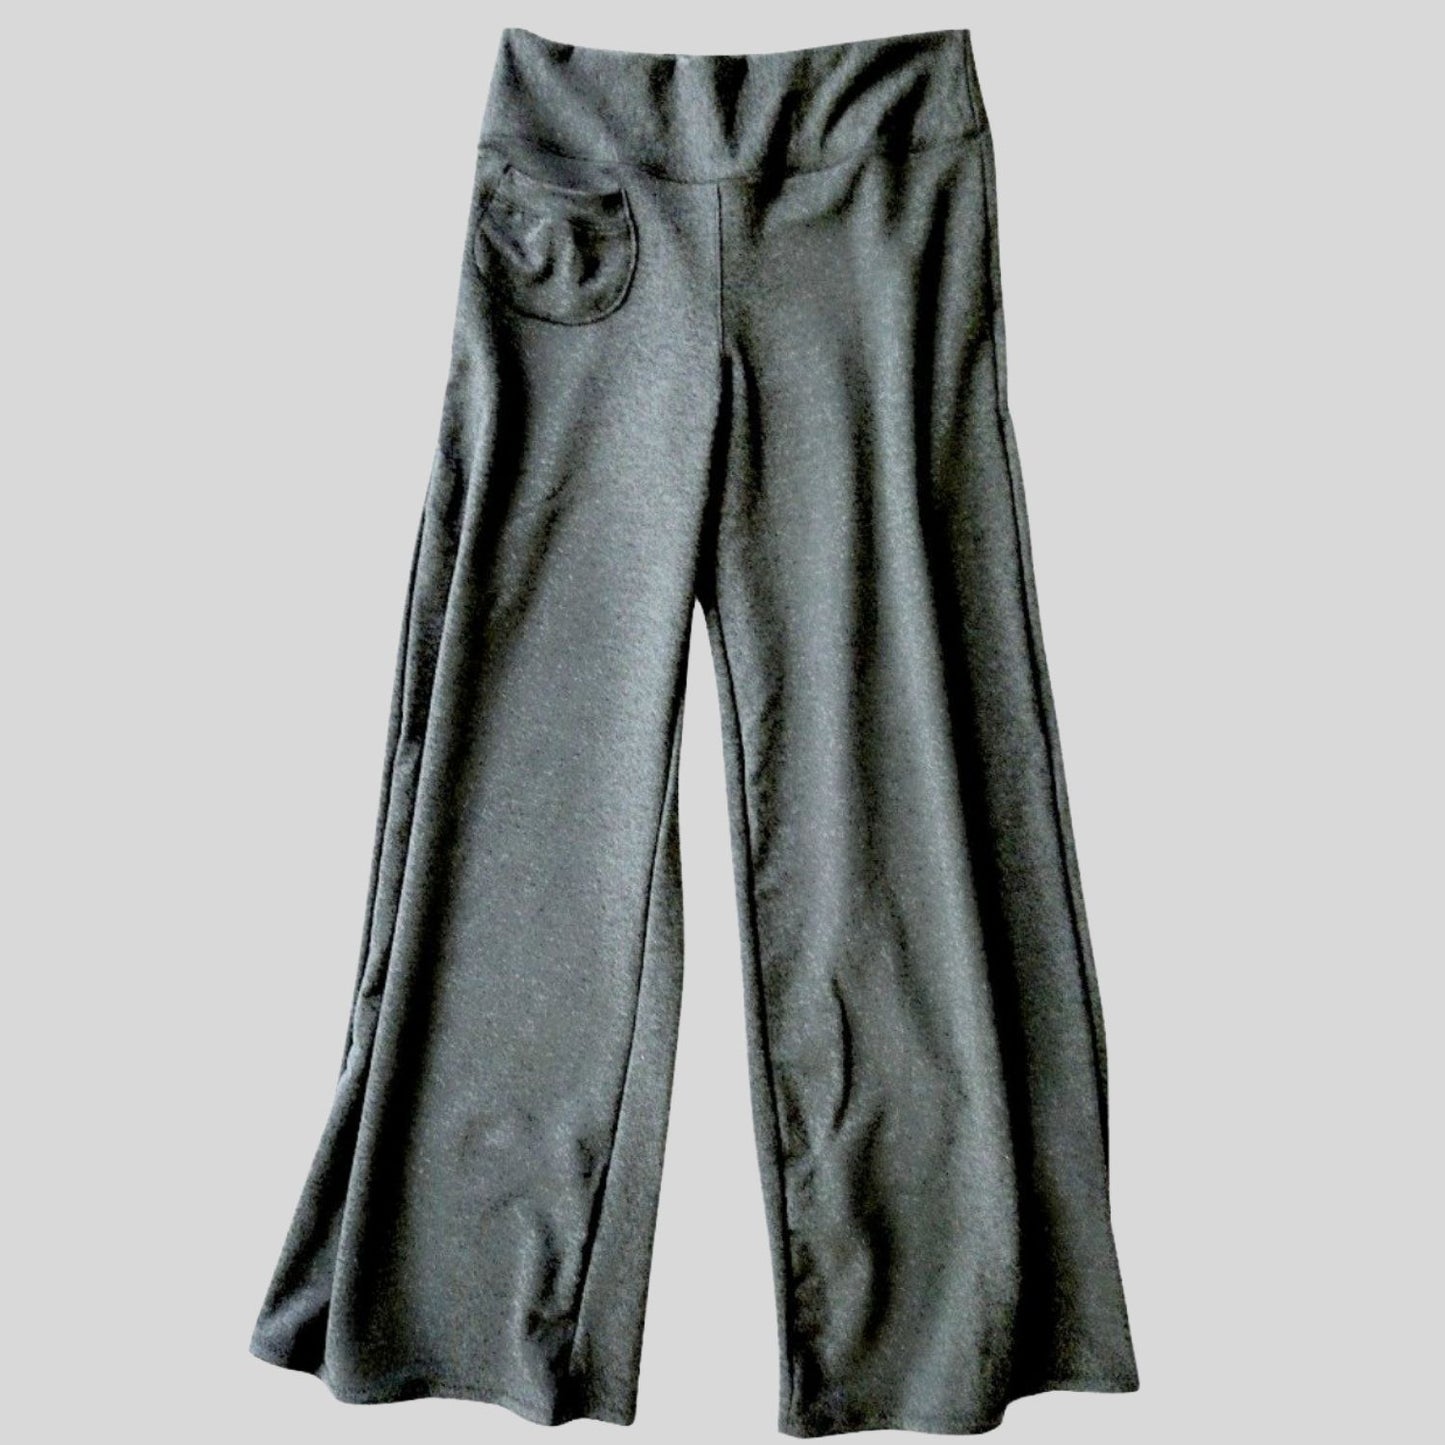 Buy Wide leg grey pants | Organic  palazzo pants Canada 